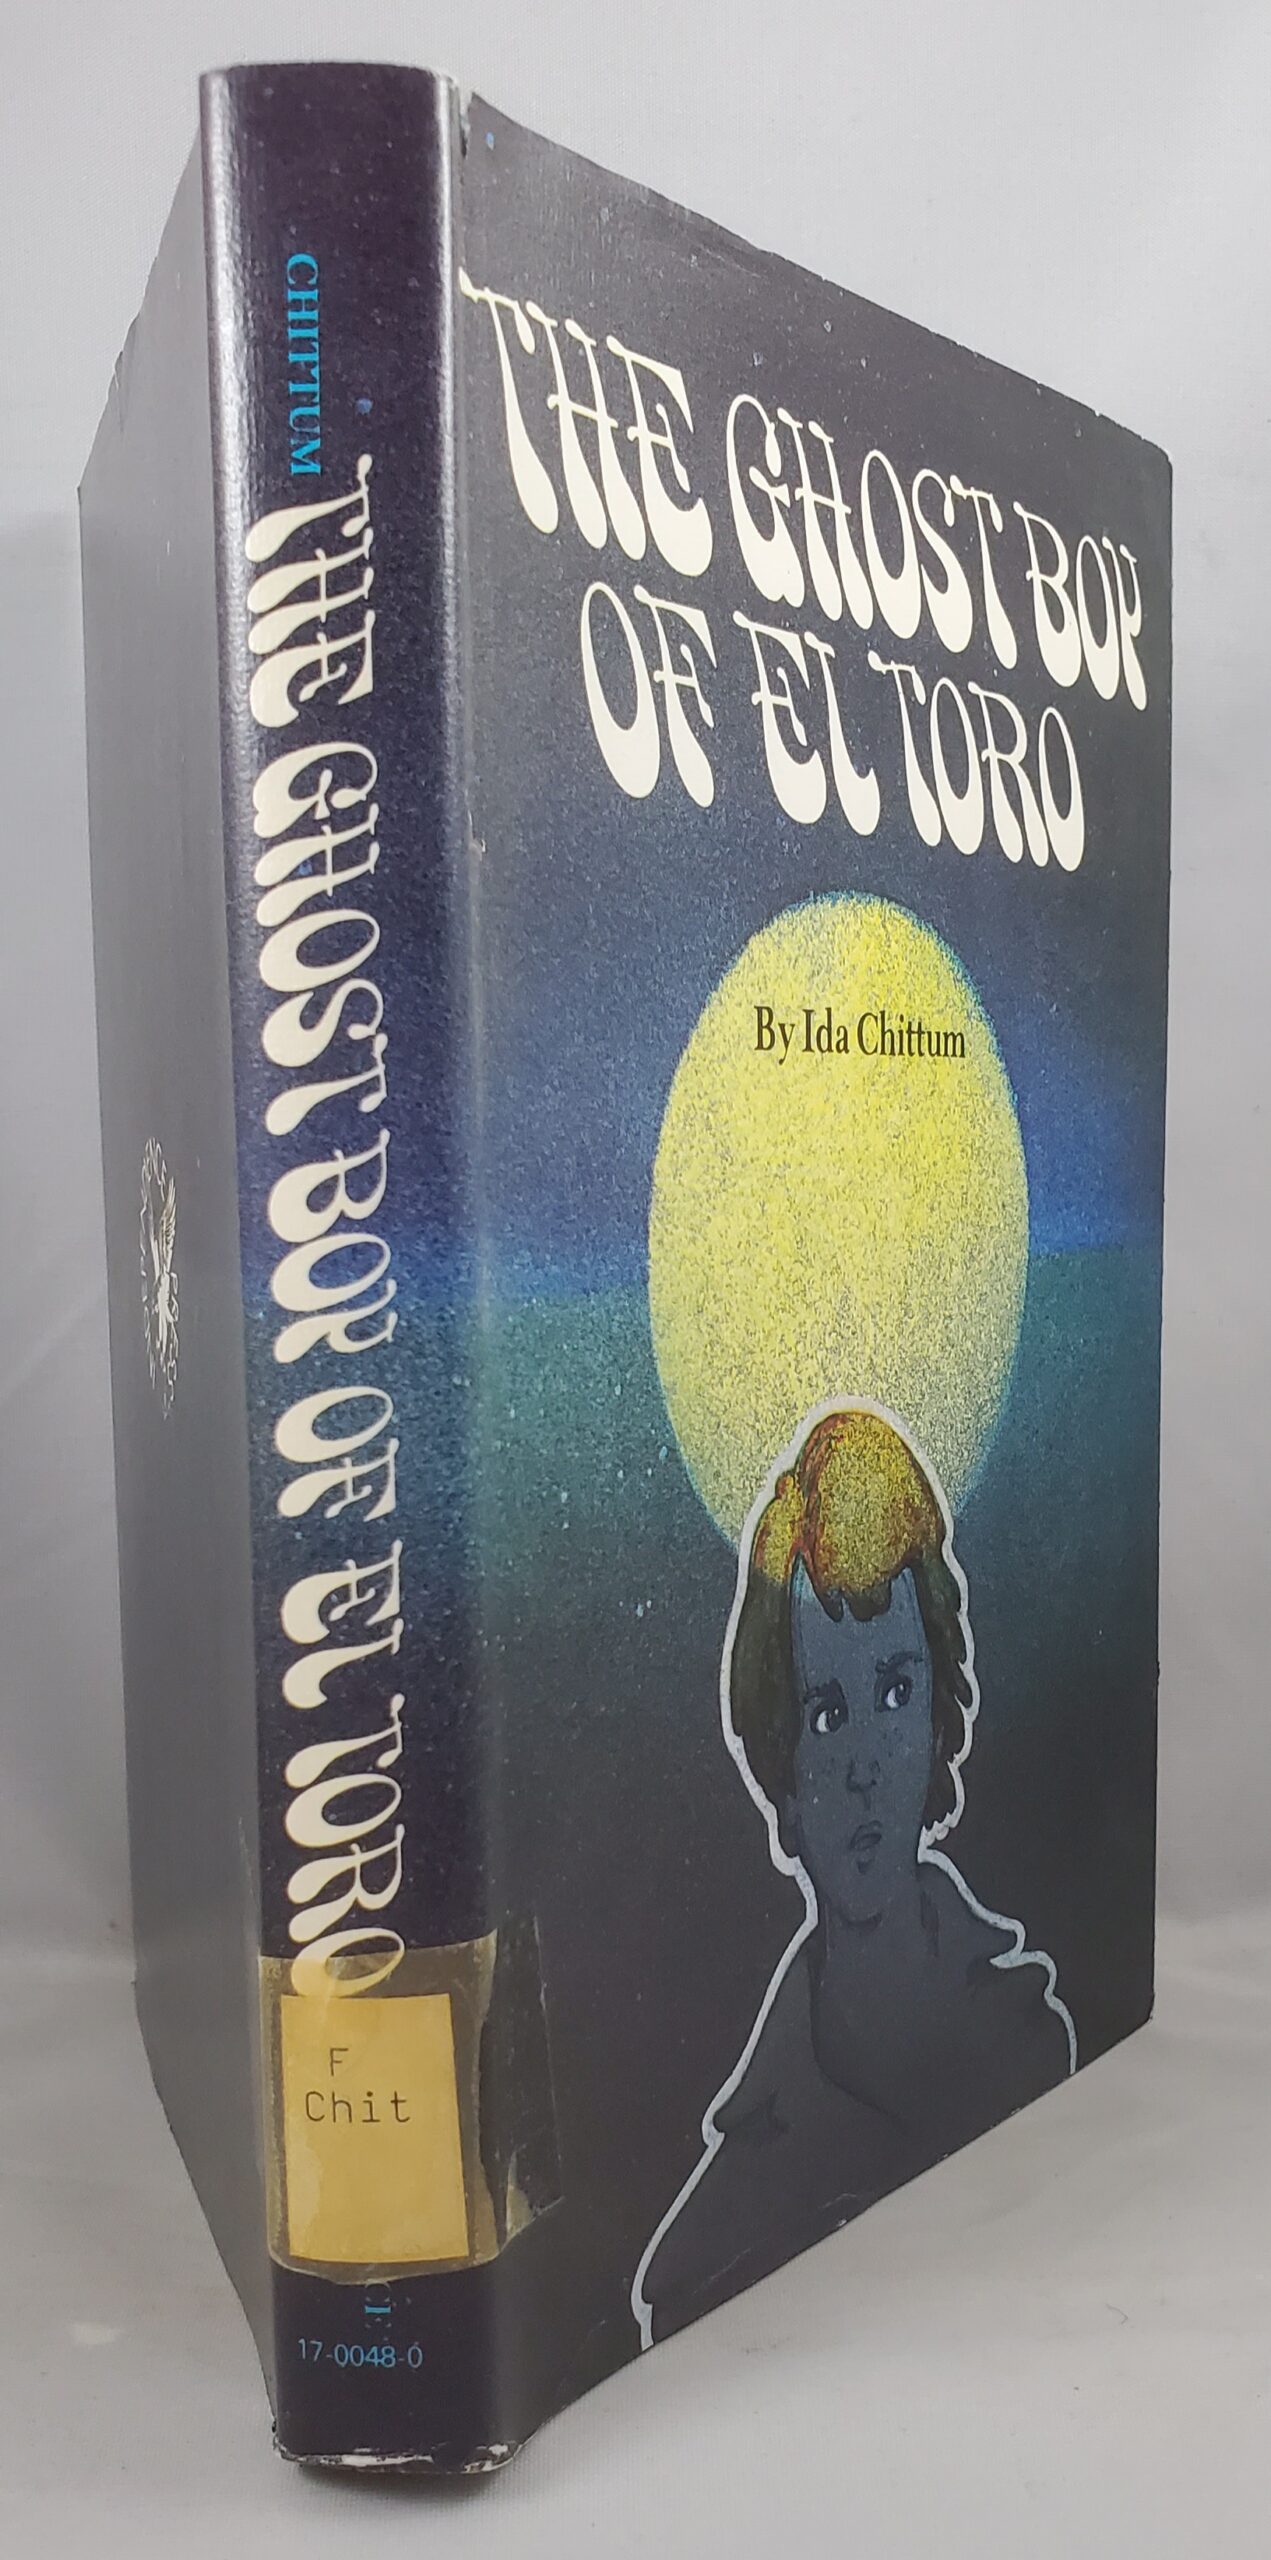 Ghost boy of El Torro – seek ye best books